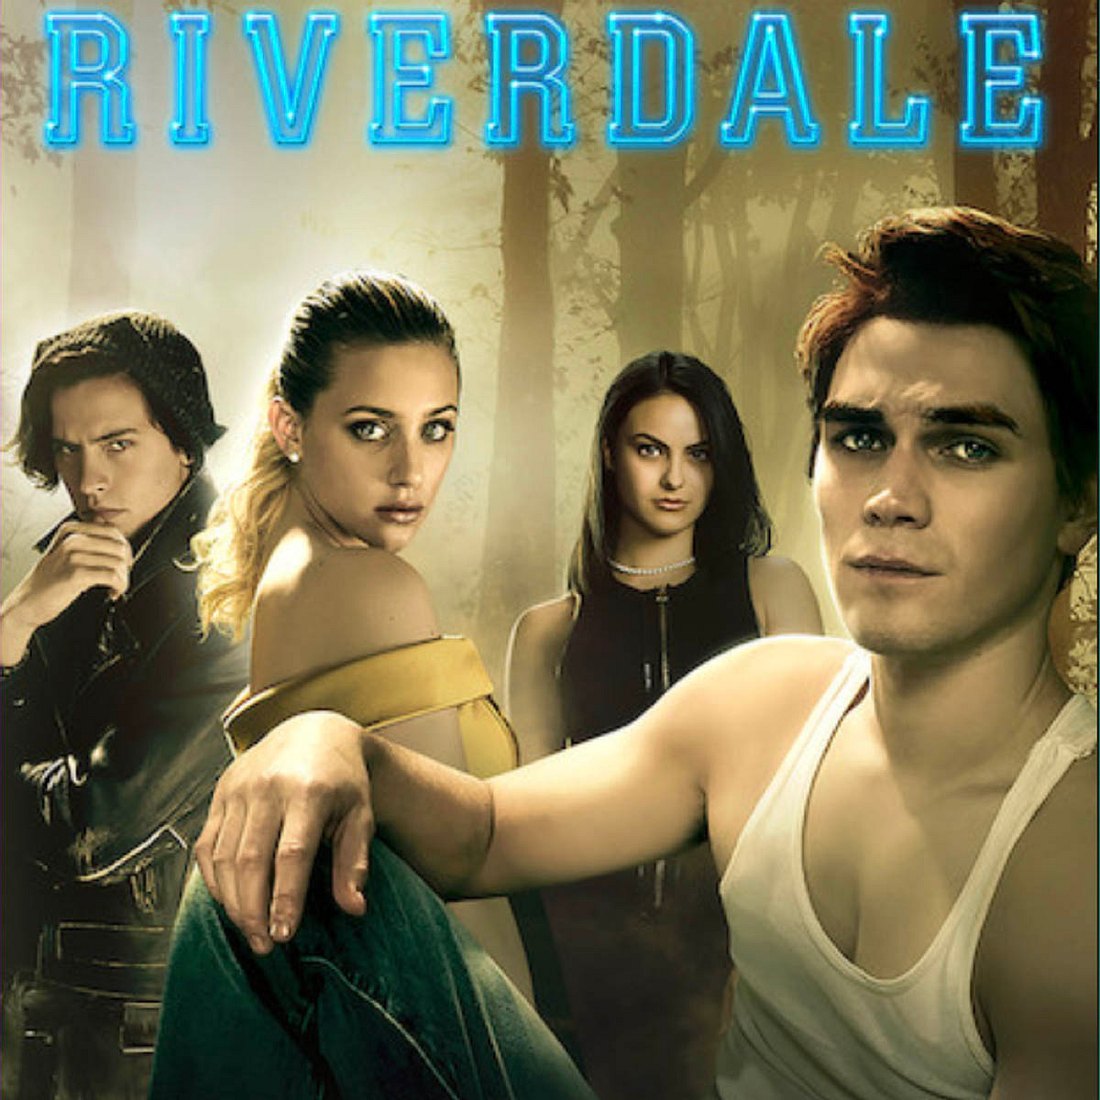 Riverdale Premiere Staffel 6: Wann geht es los?